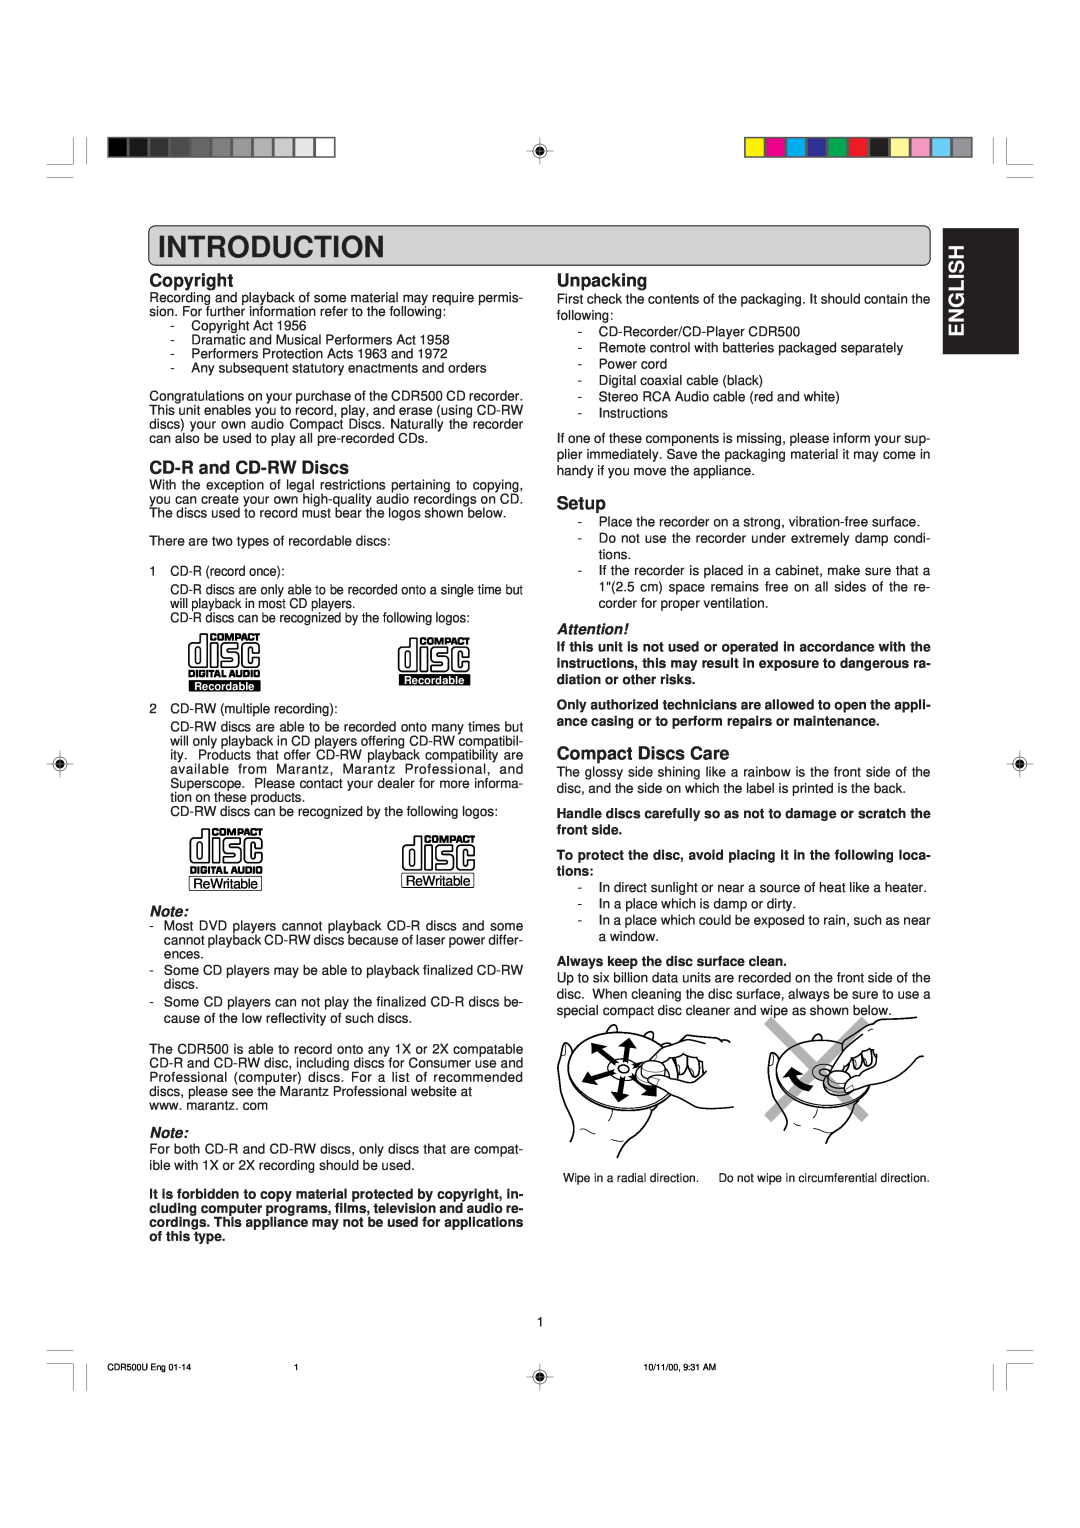 Marantz CDR500 manual Introduction, English, Copyright, CD-Rand CD-RWDiscs, Unpacking, Setup, Compact Discs Care 